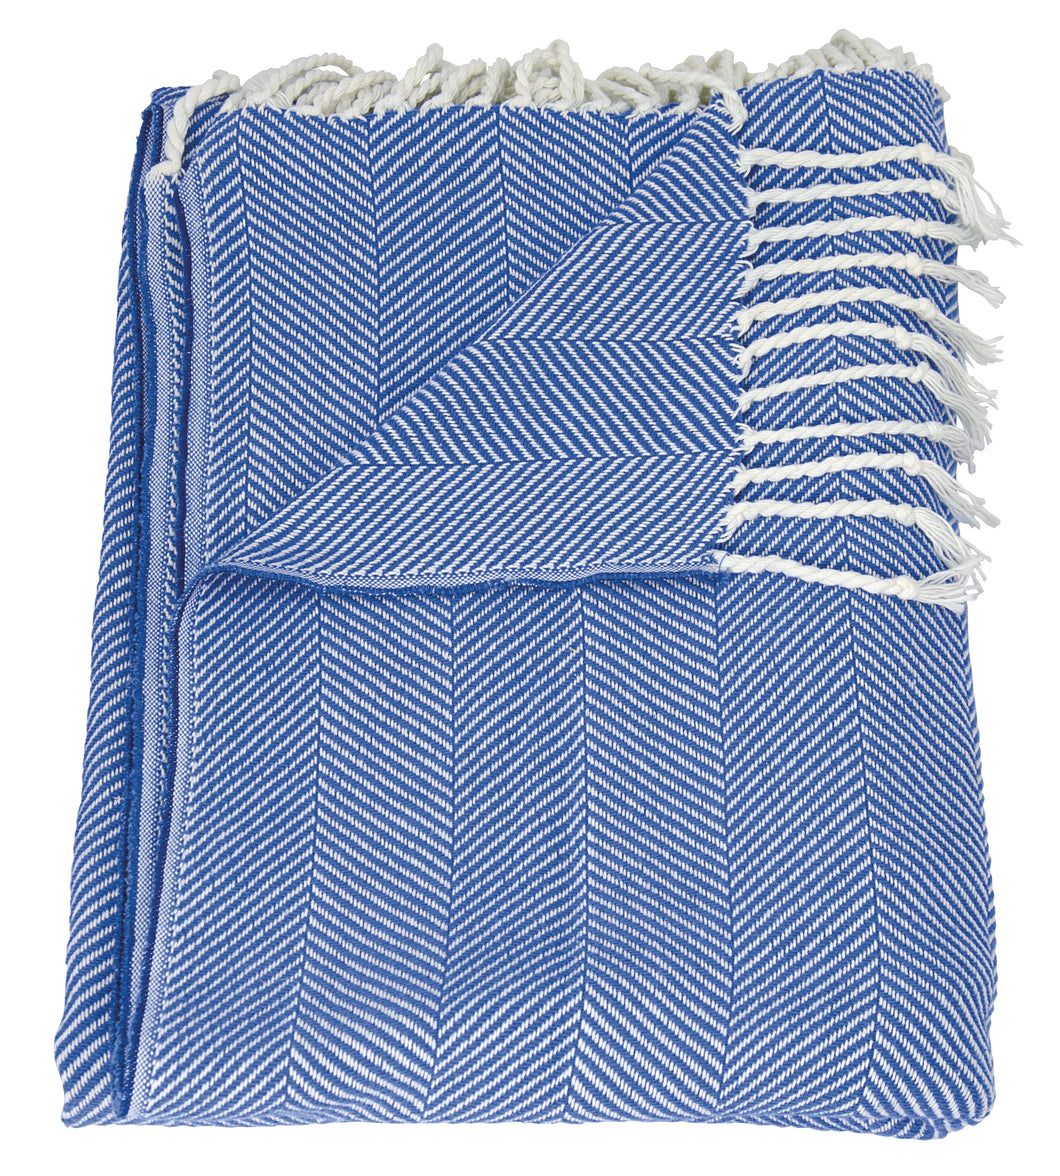 Mina Victory Throw Organic Cotton Throw Cayan Blue Throw Blanket SZ008 50